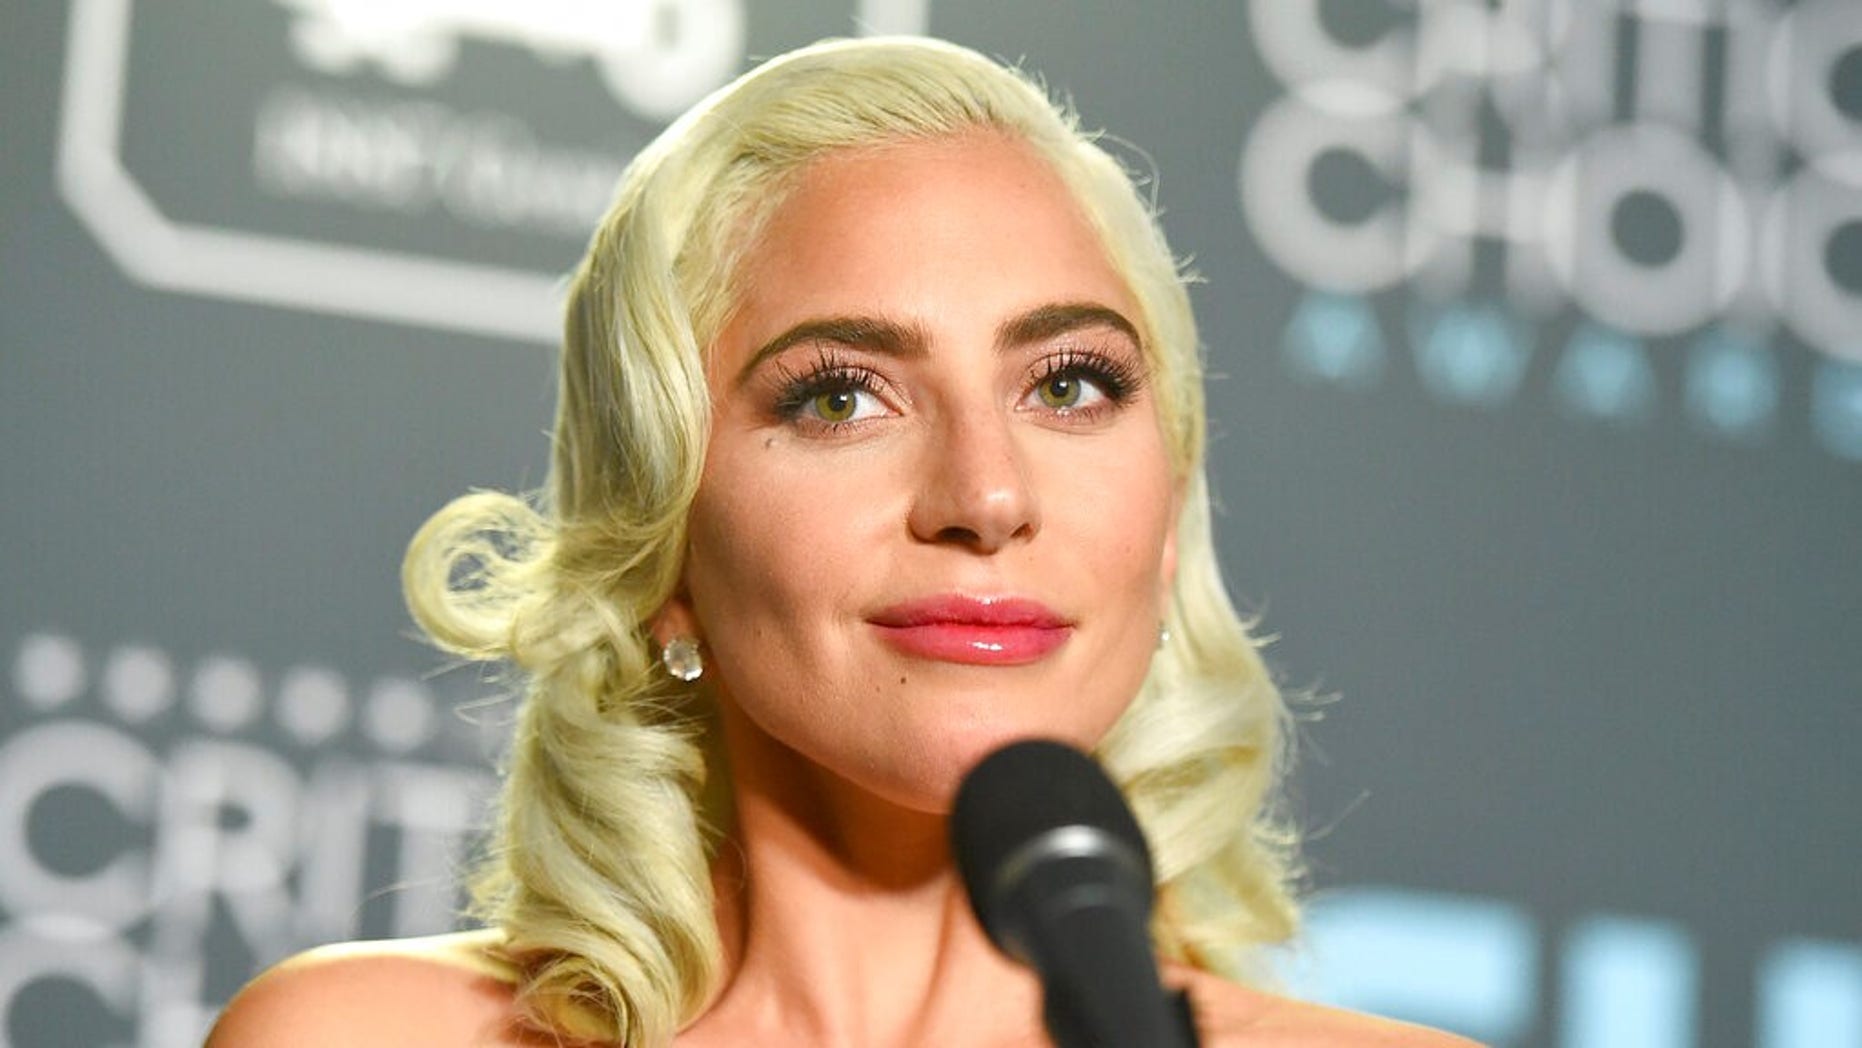 Lady Gaga to perform at 2019 Grammys | Fox News